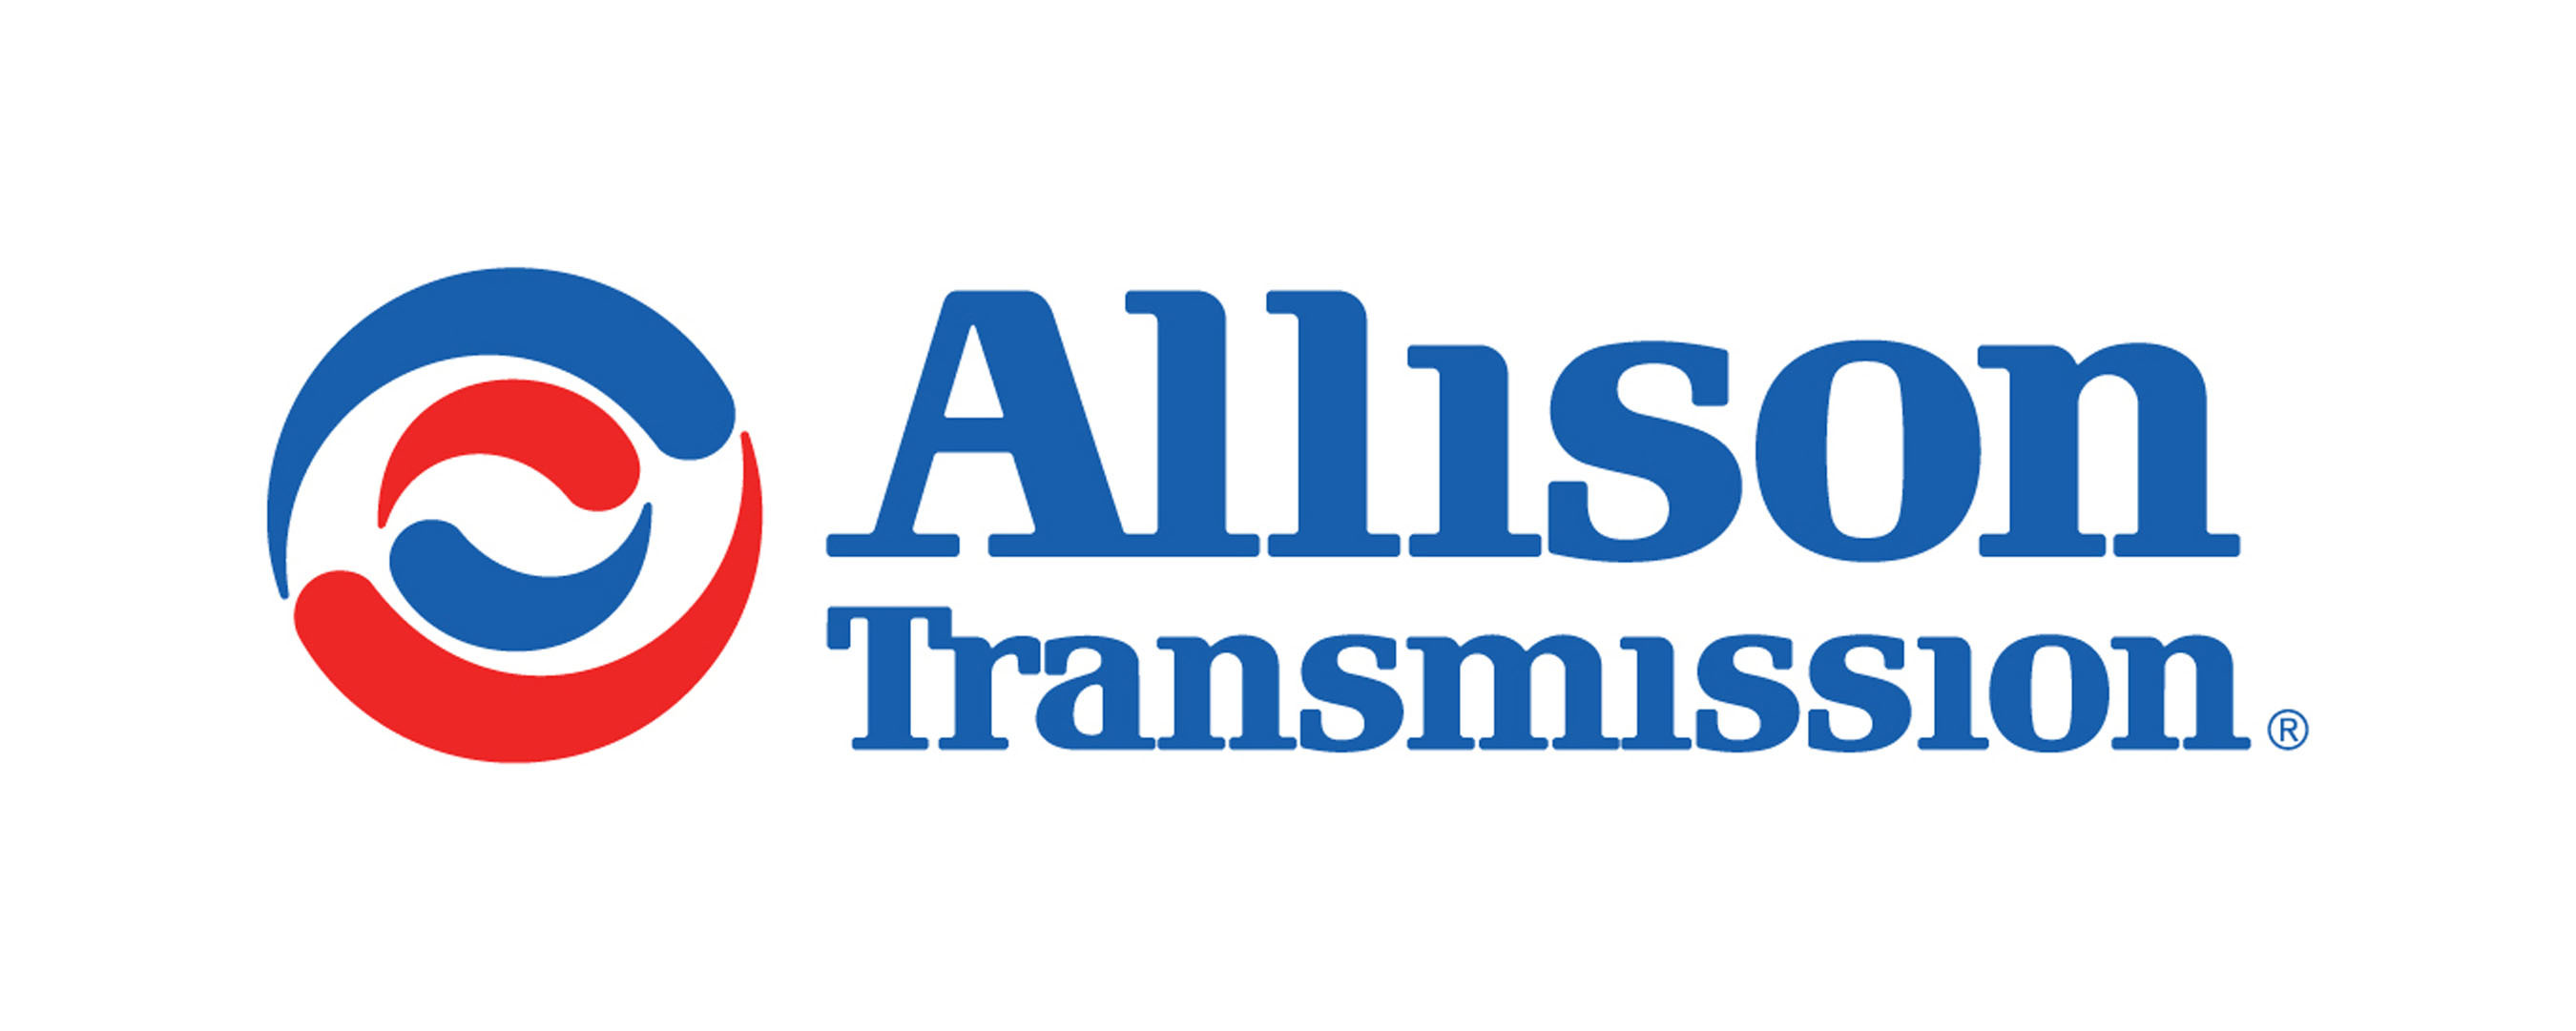 Allison Transmission Holdings Inc